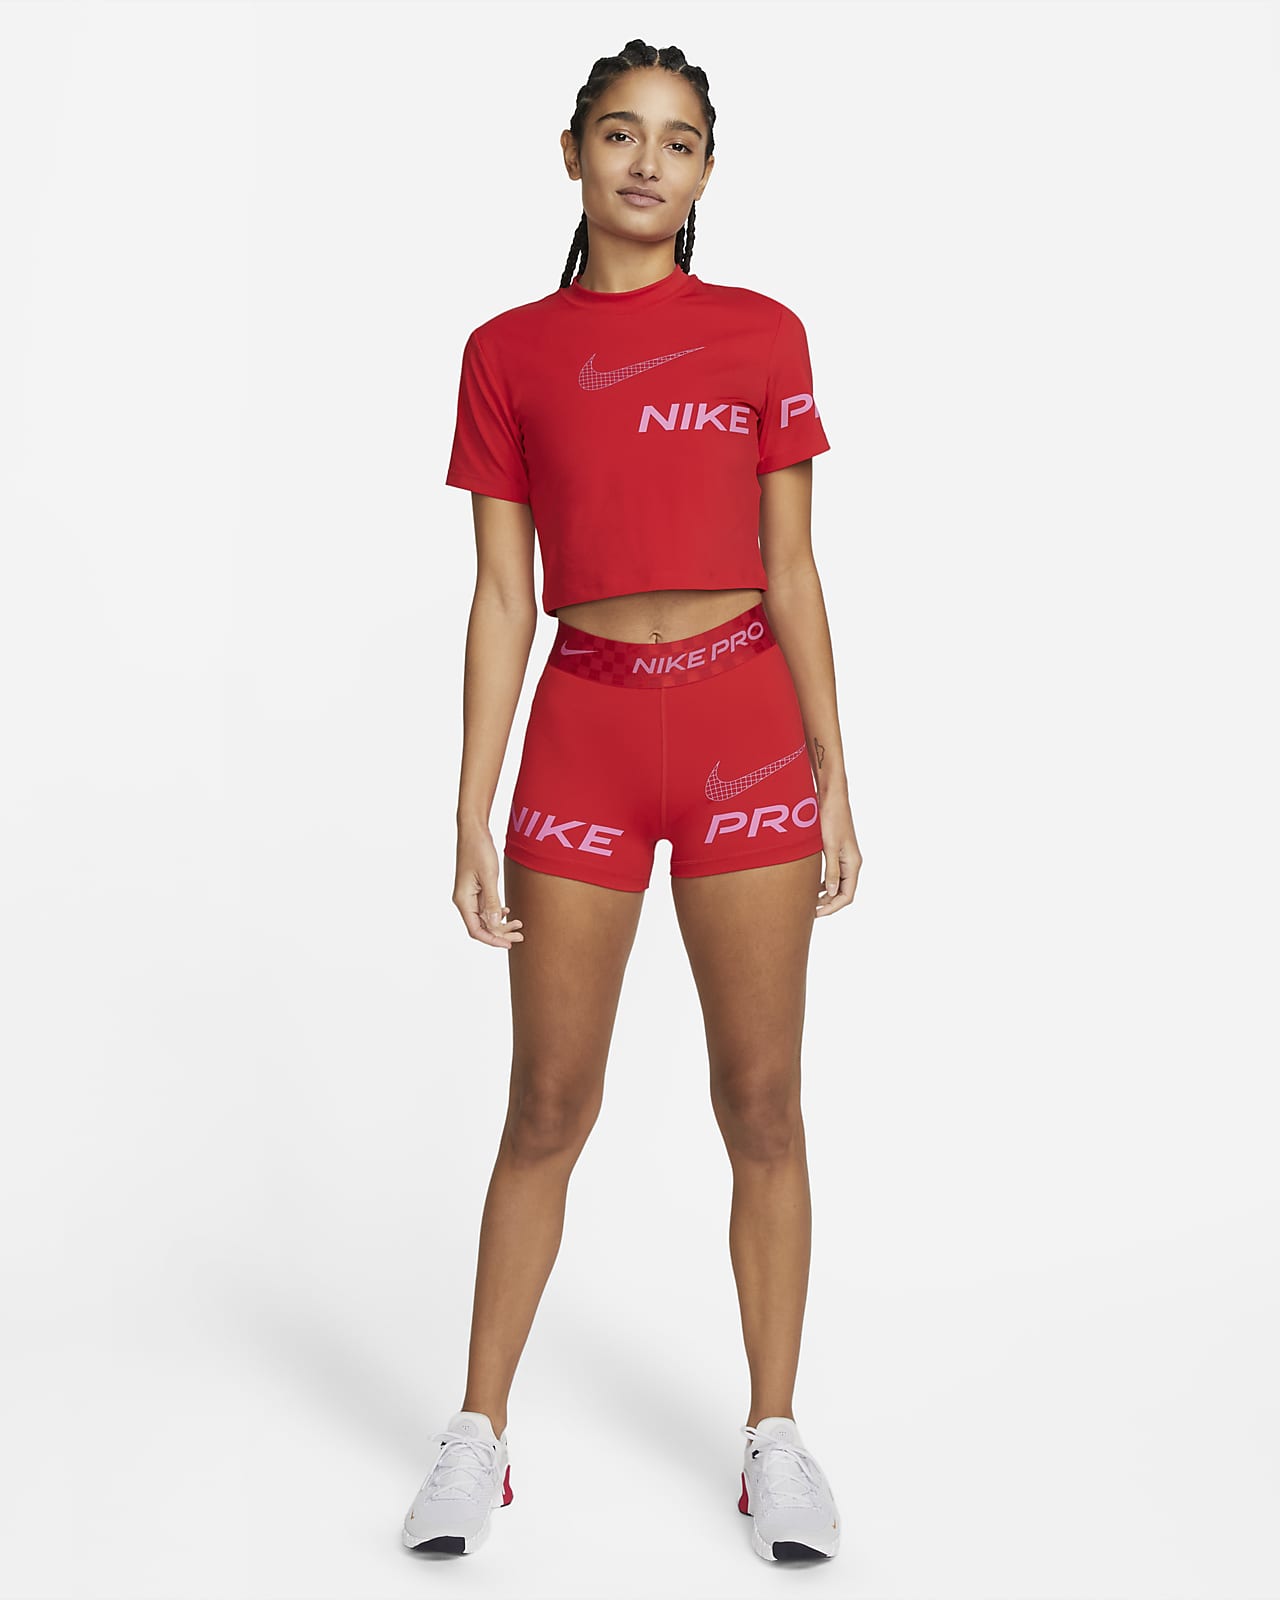 Nike Pro Training 365 3-inch shorts in khaki